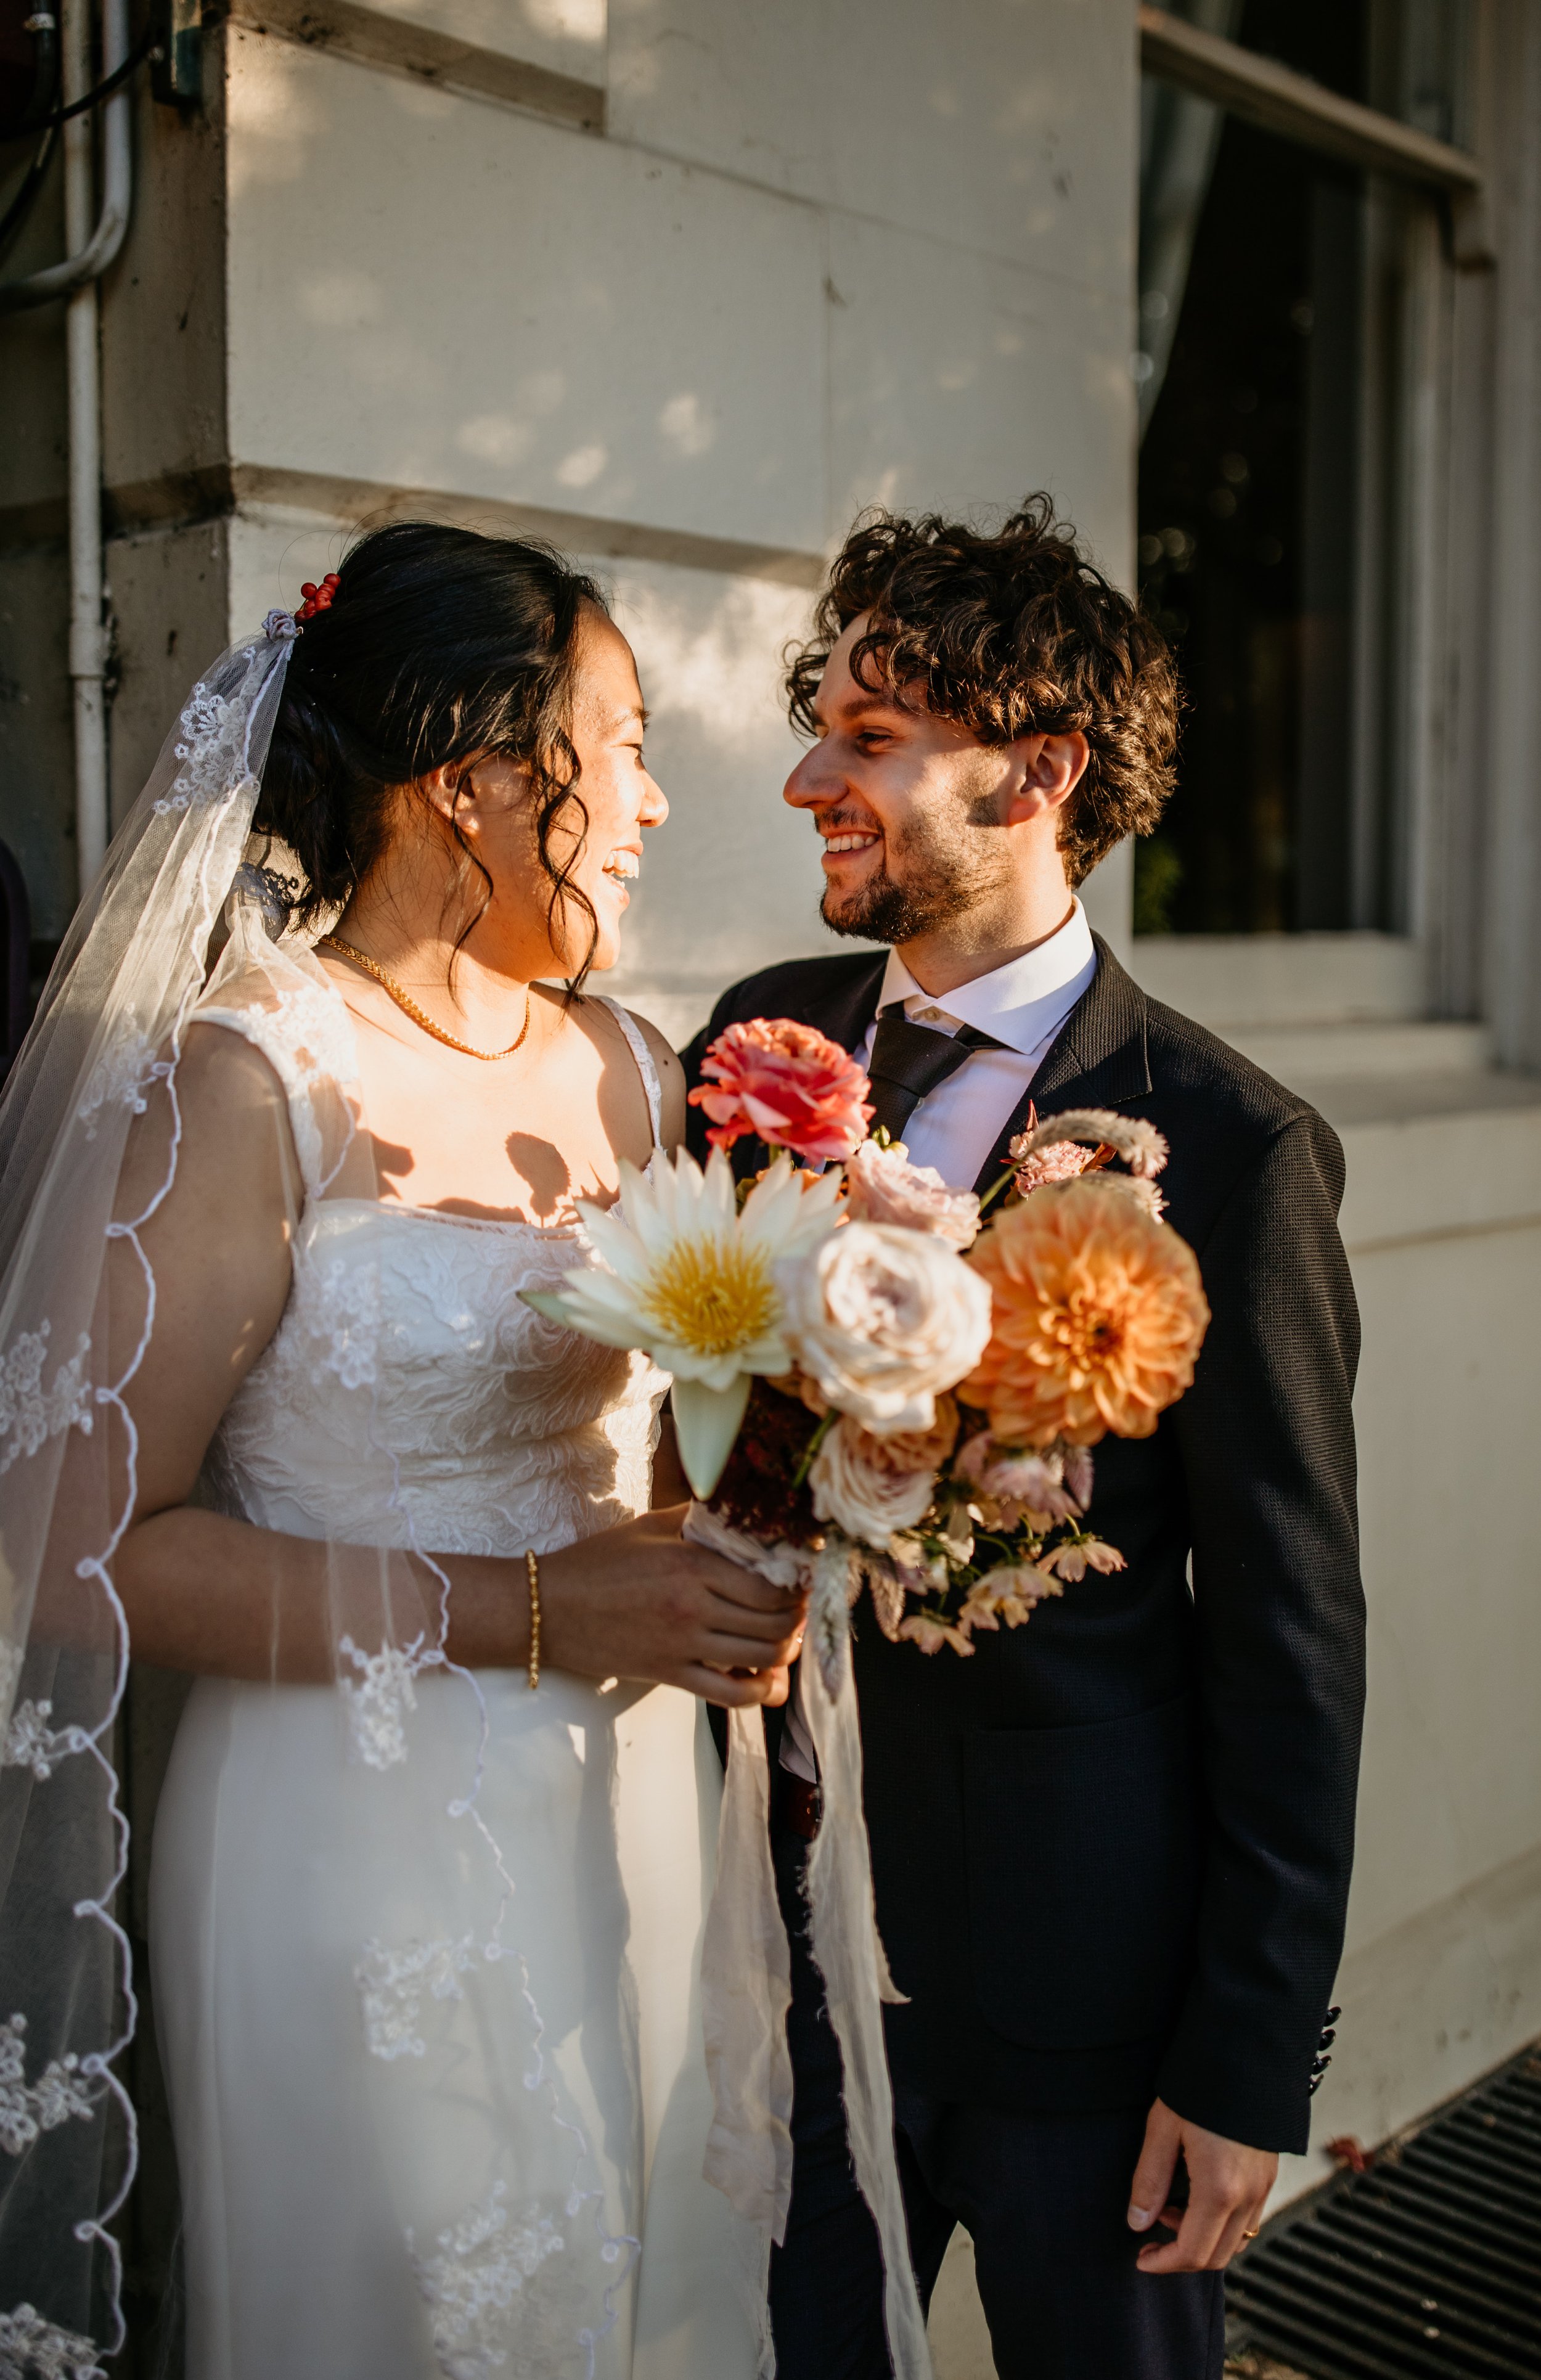 Bride and Groom holding wedding flowers